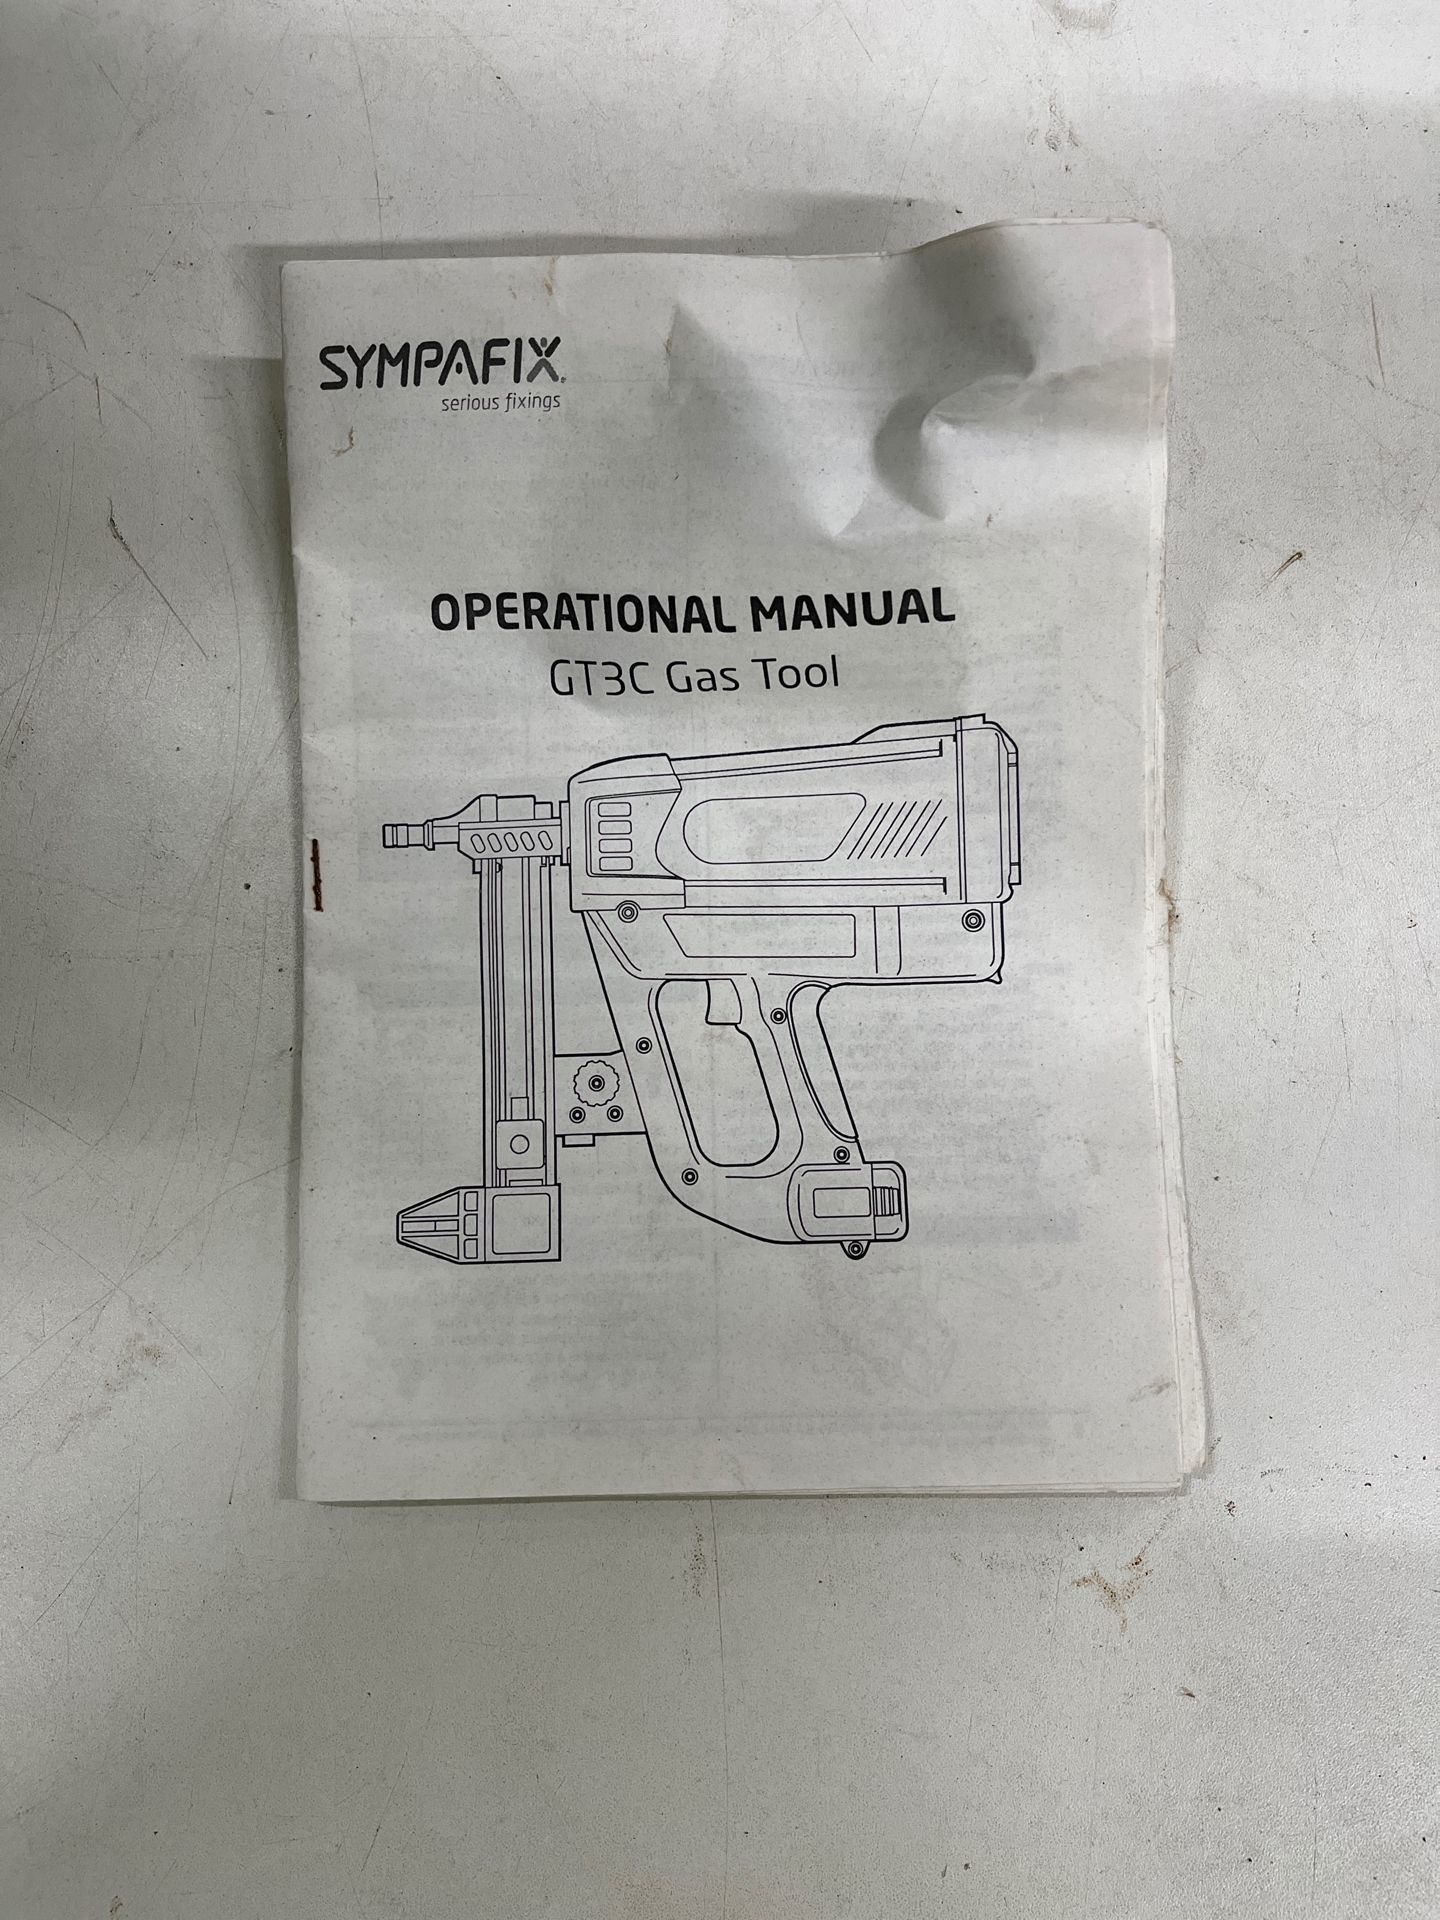 Sympatix GT3 Nail Gun - Image 6 of 6